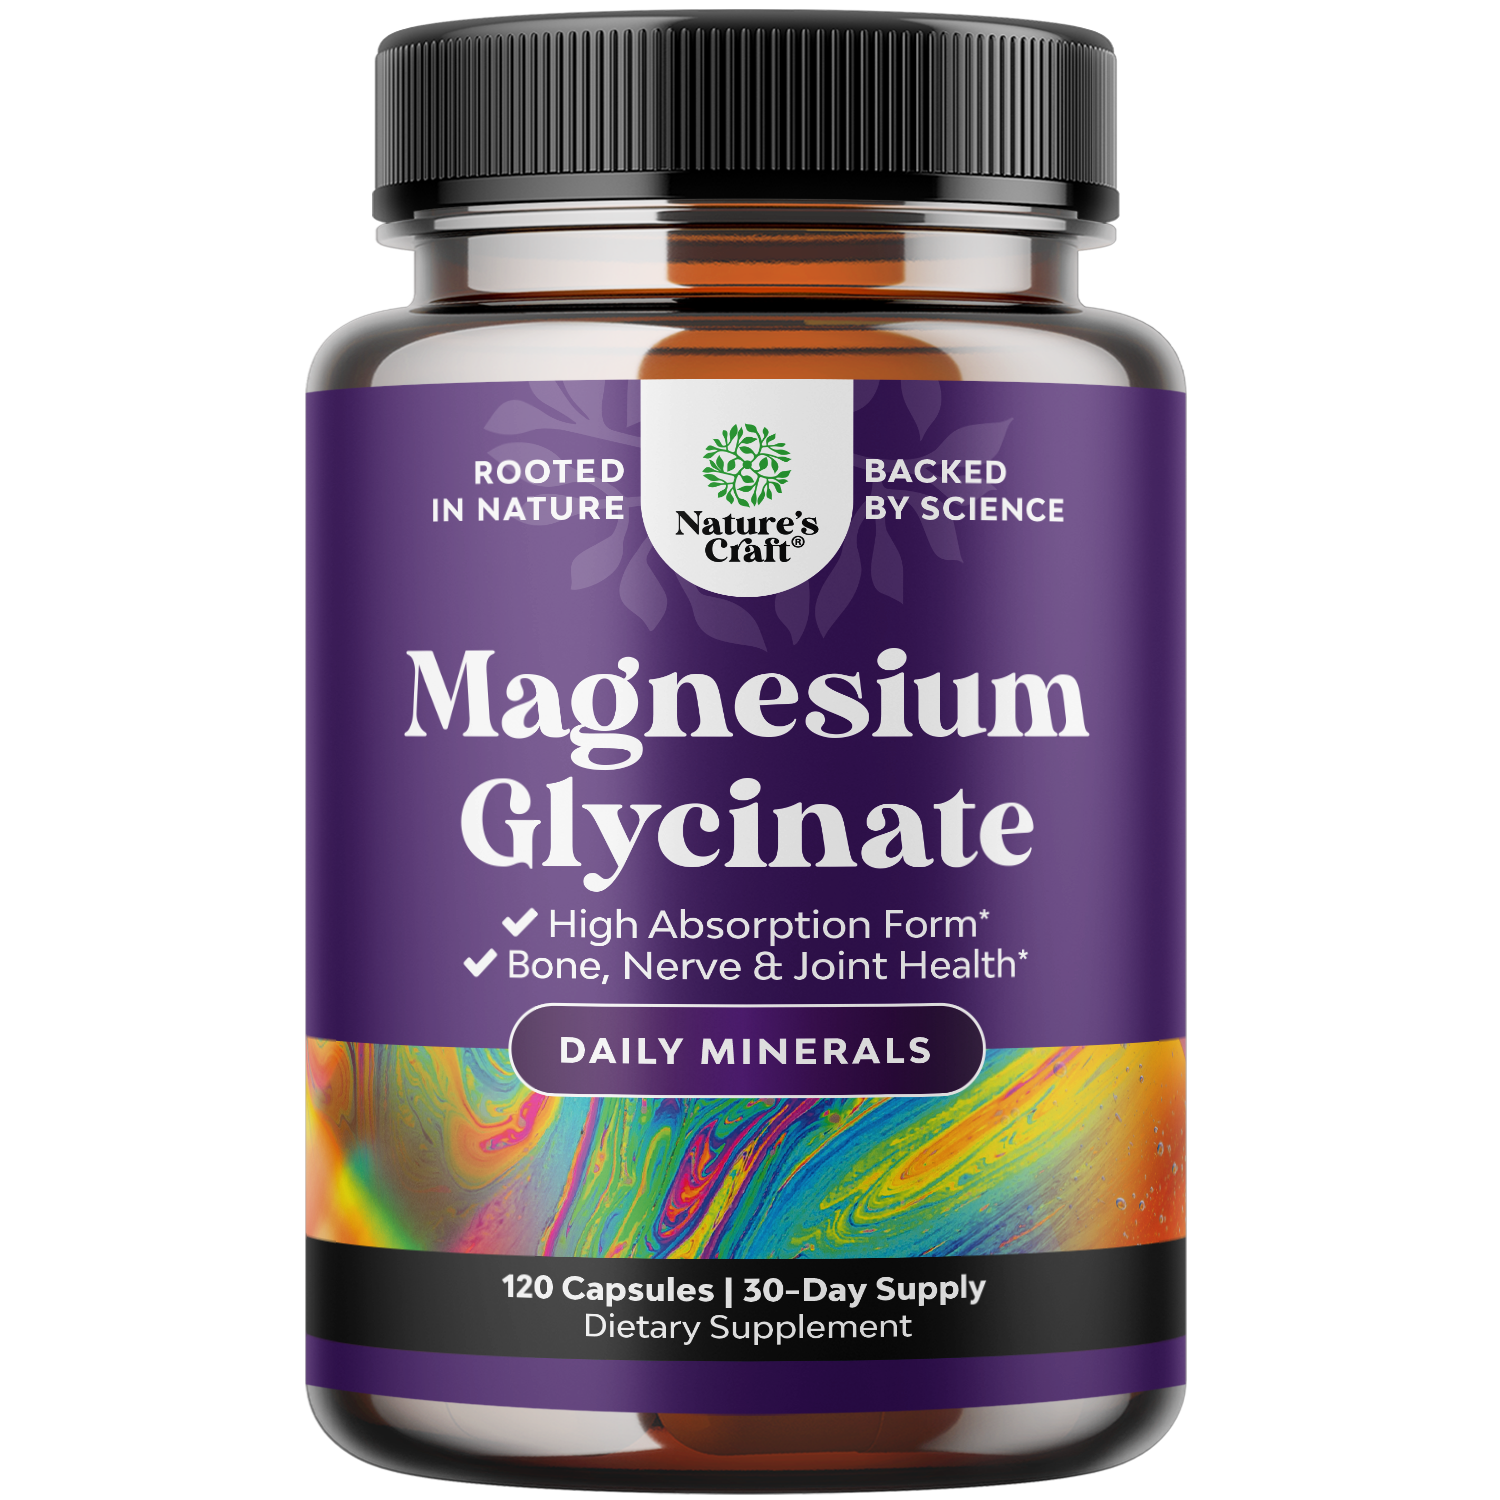 Magnesium Glycinate 500mg per serving